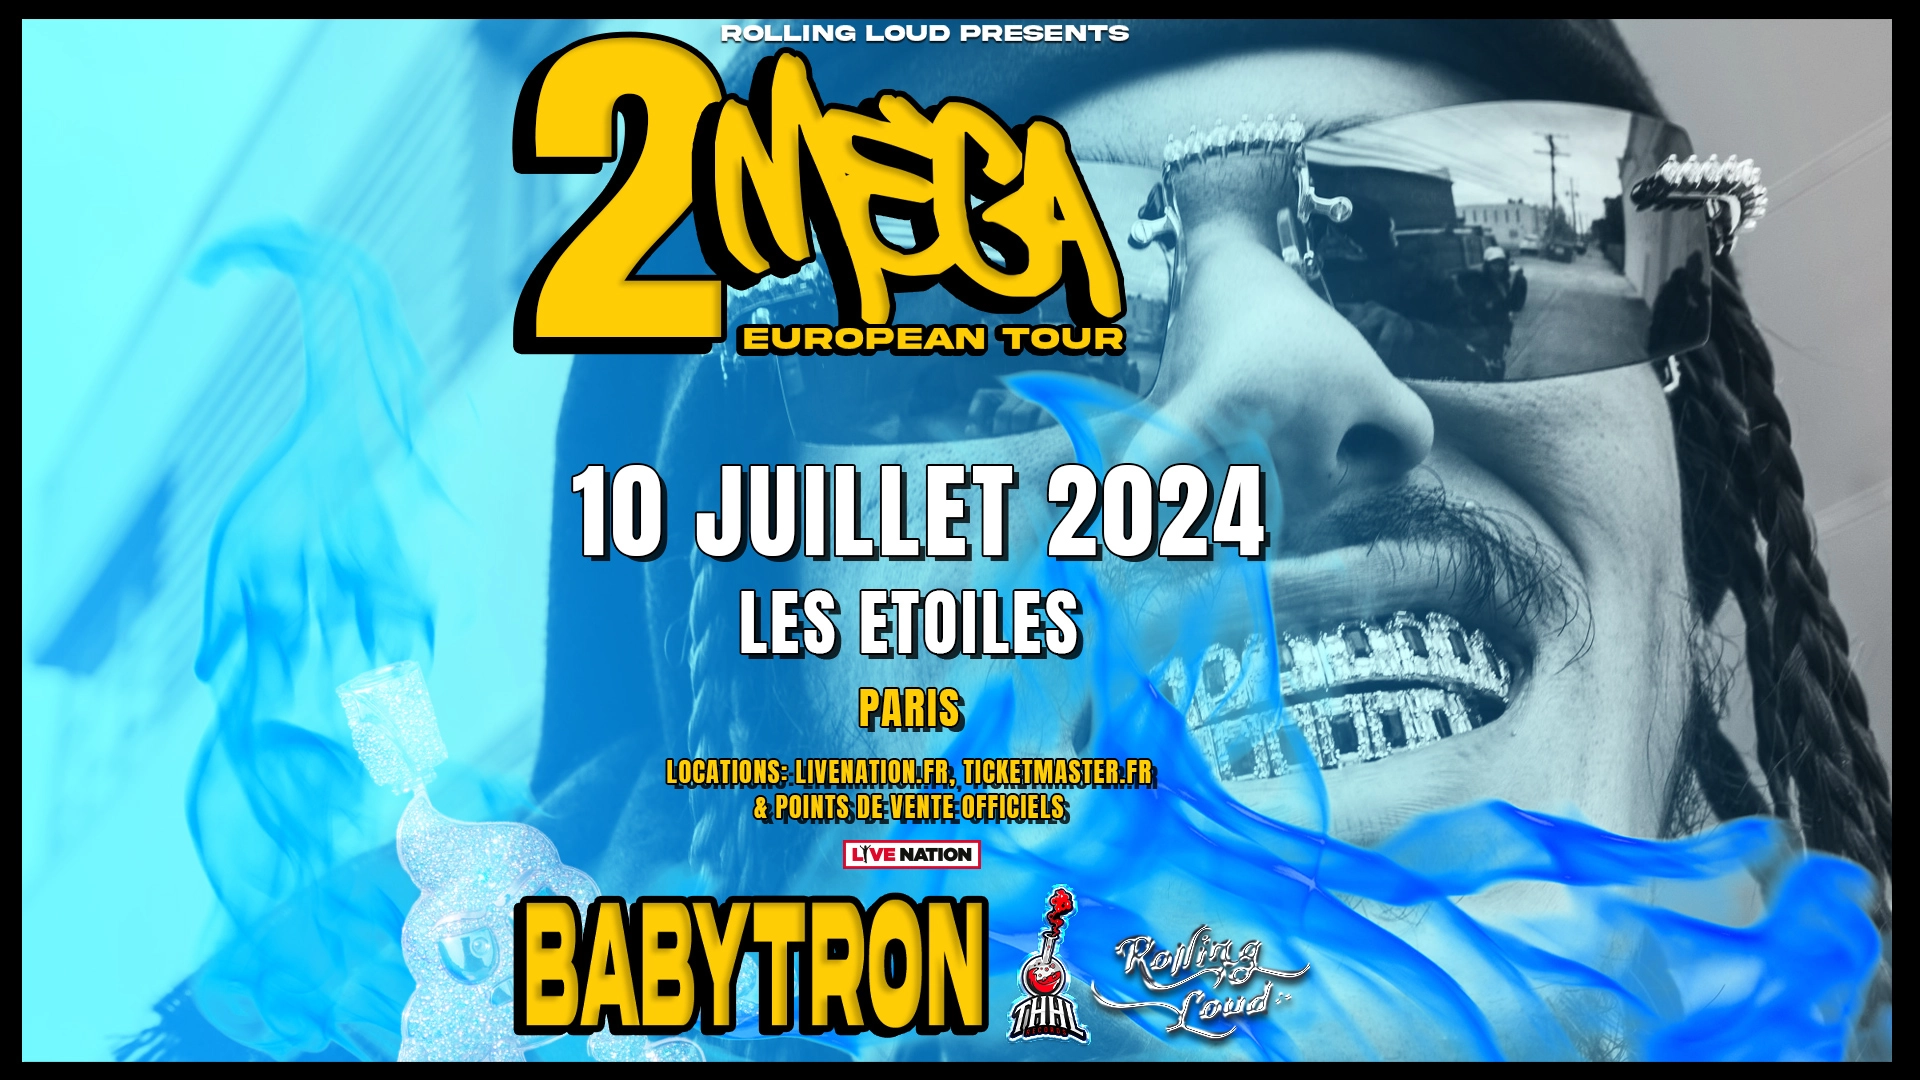 BabyTron at Les Etoiles Tickets